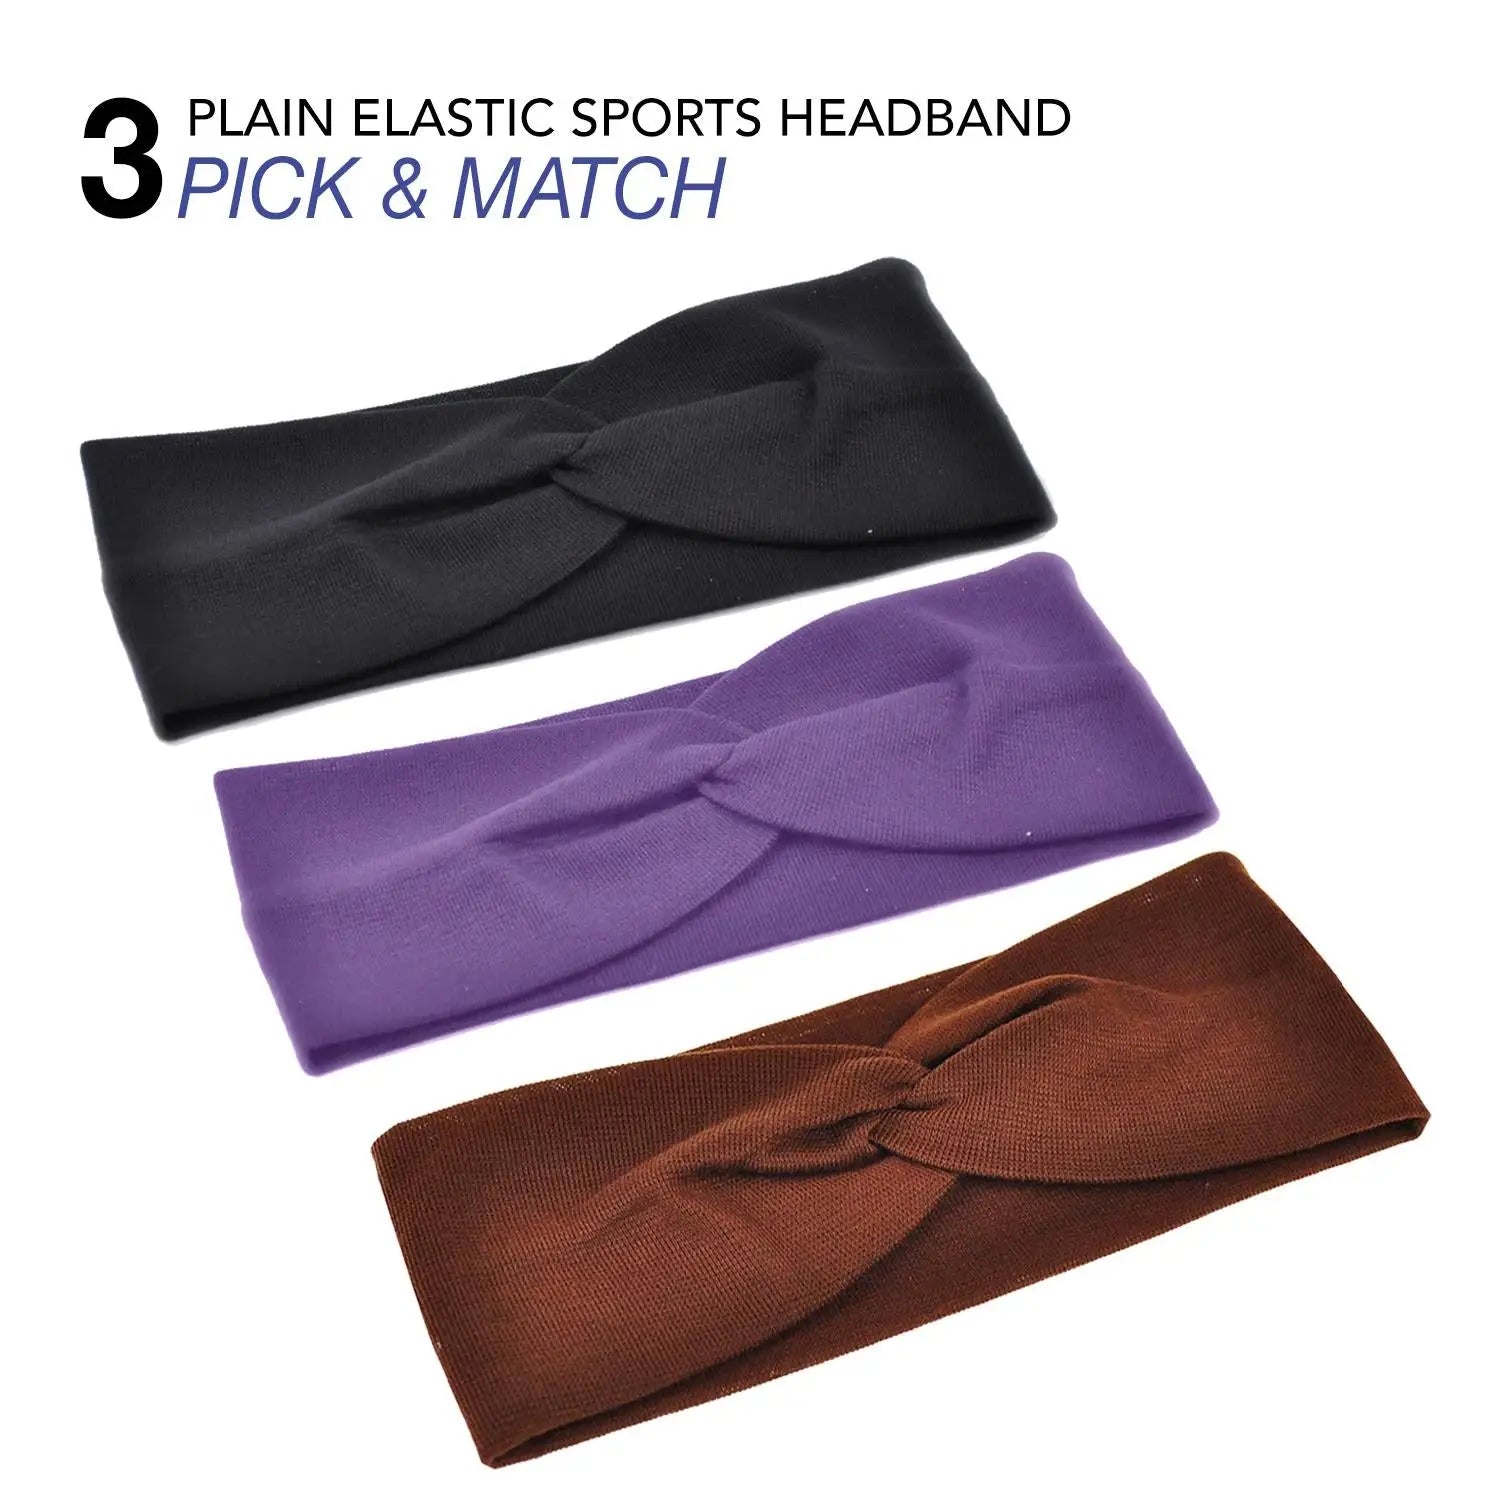 Versatile Knot Yoga Headband Trio - Set of 3 plain elastic headbands with bow